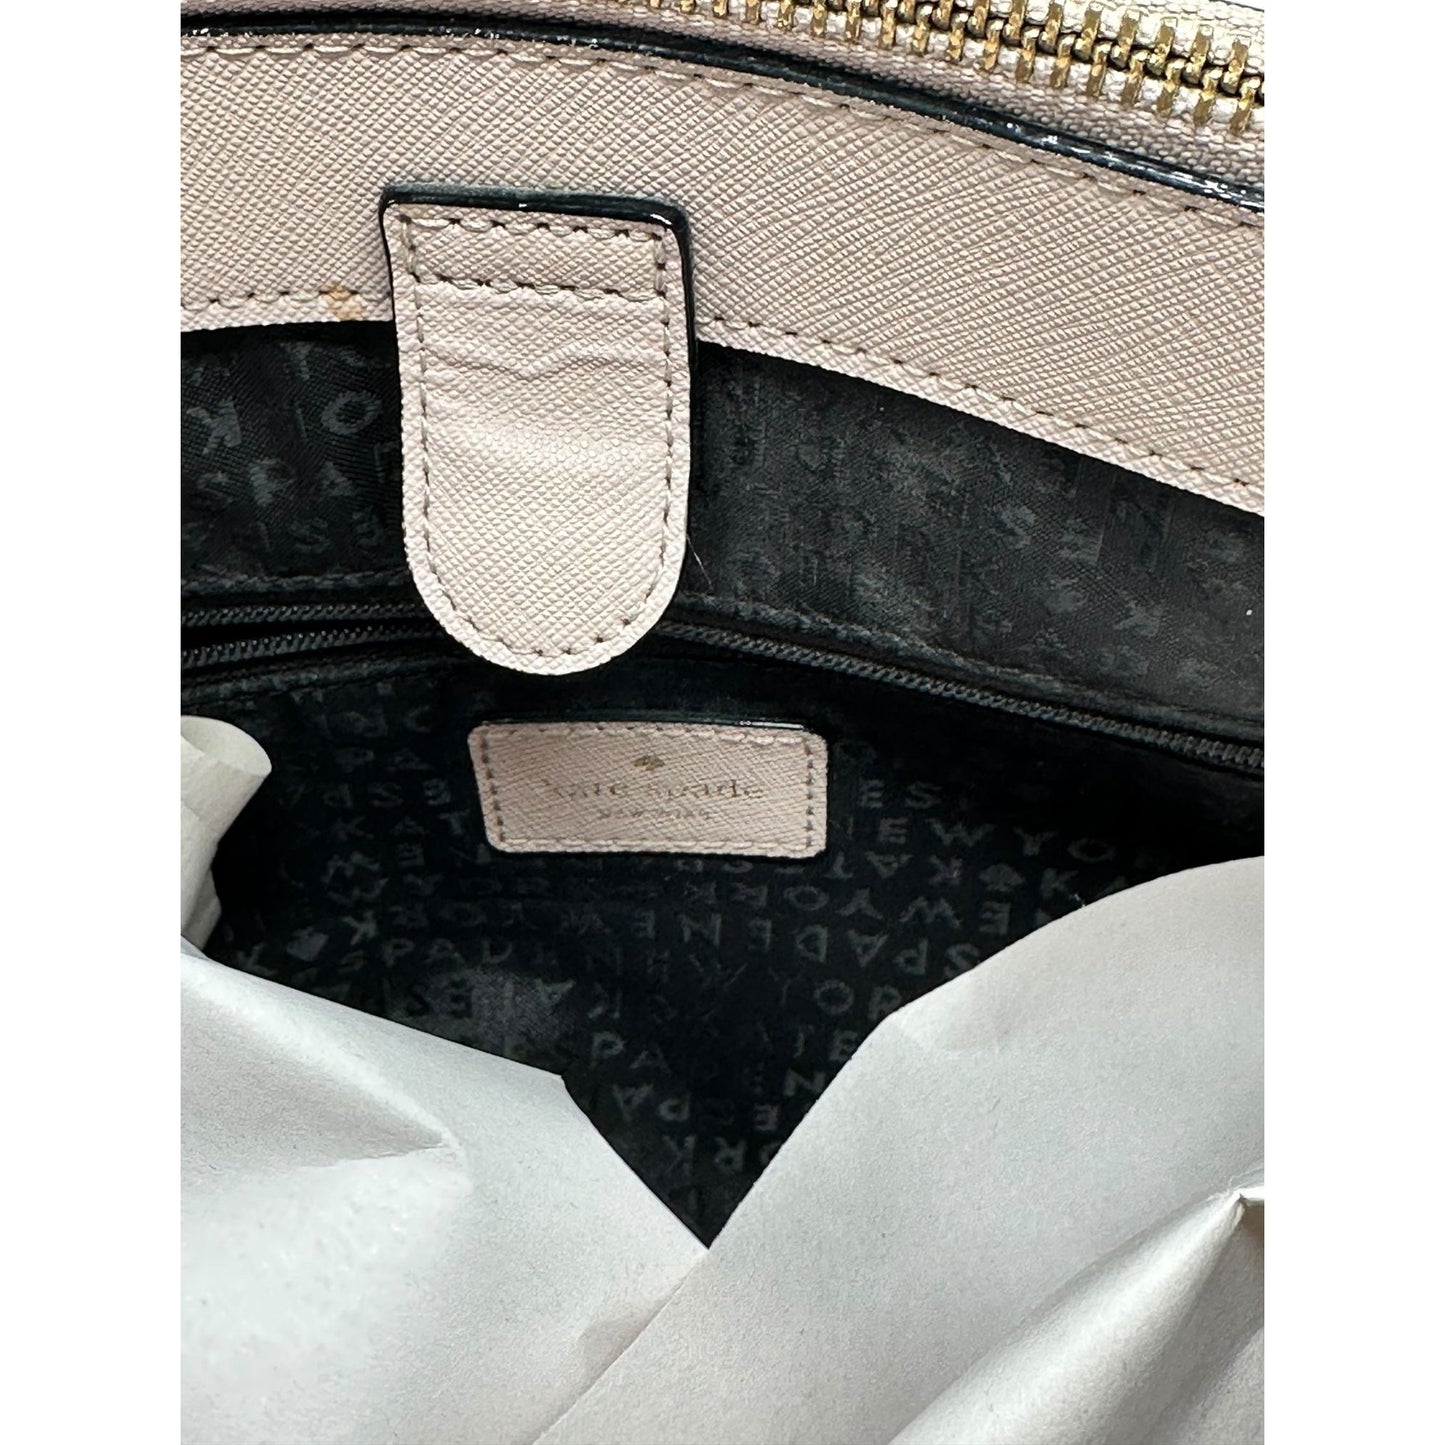 Kate Spade Womens Leighann Laurel Way Leather Satchel Almond/Black Handbag